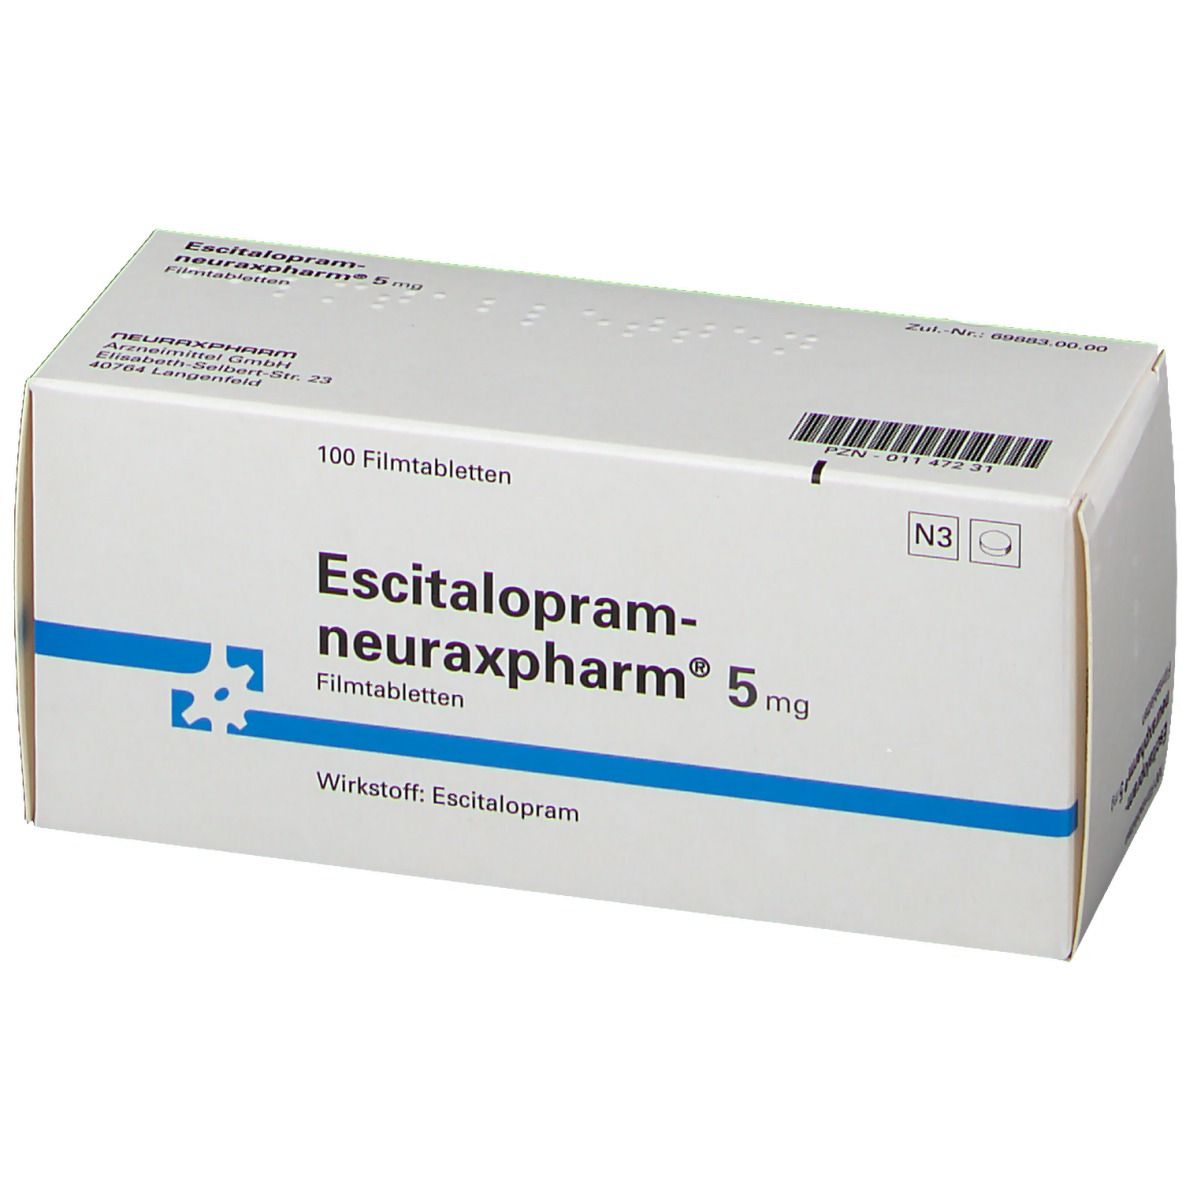 Escitalopram-neuraxpharm® 5 mg